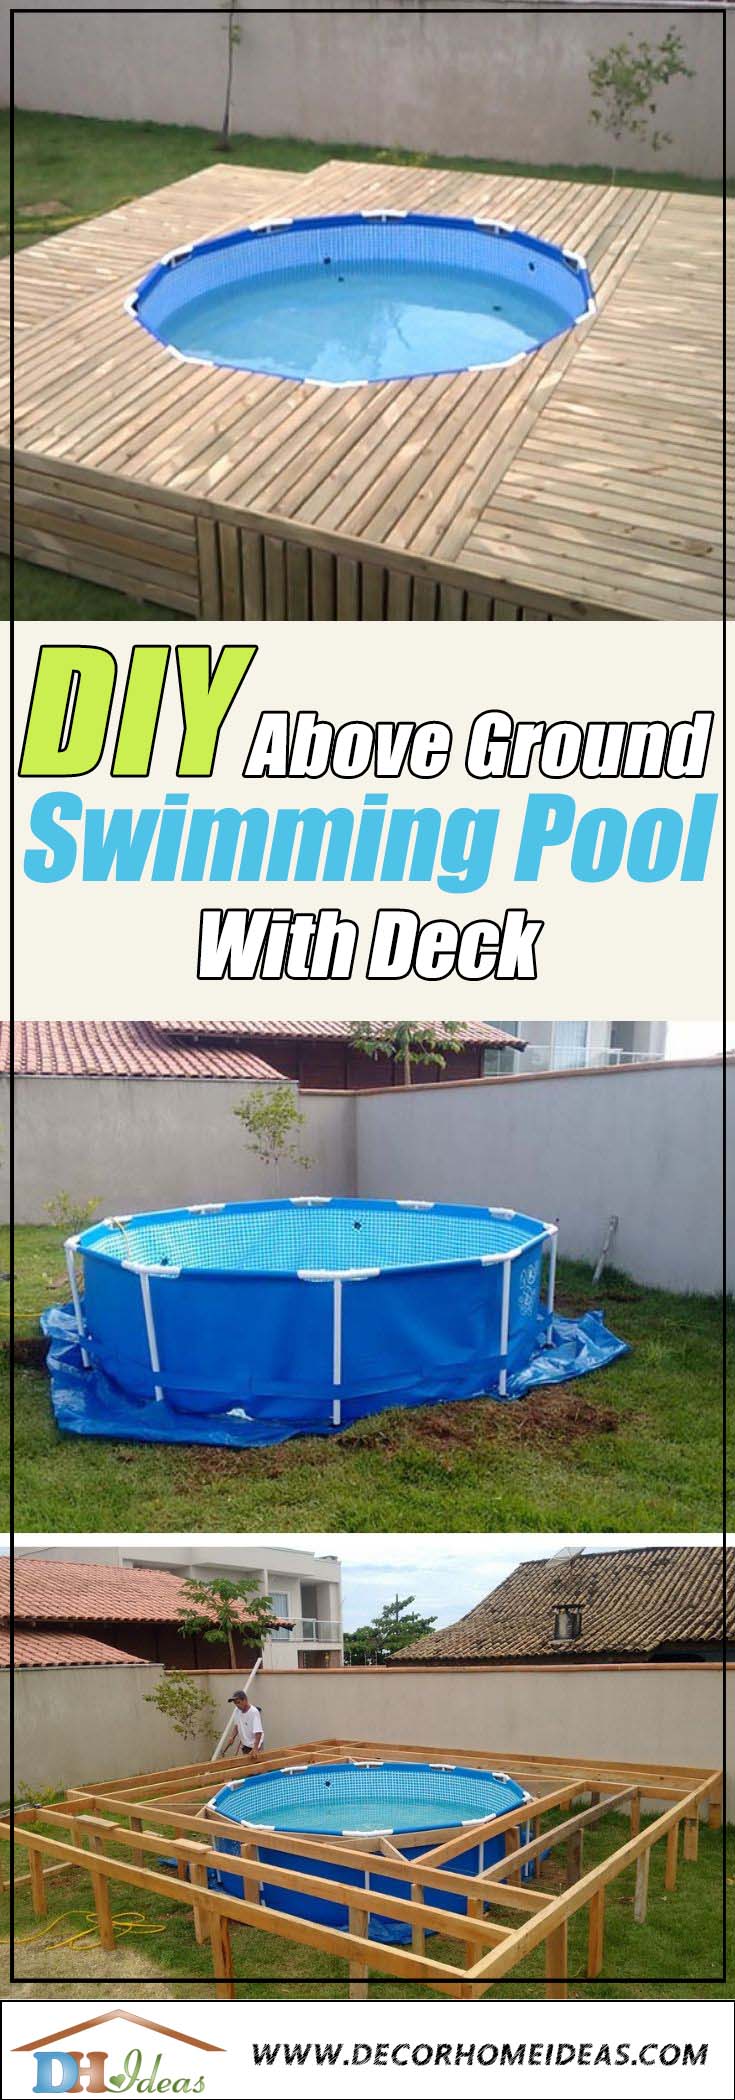 DIY Above Ground Swimming Pool With Deck #pool #diy #deck #decorhomeideas